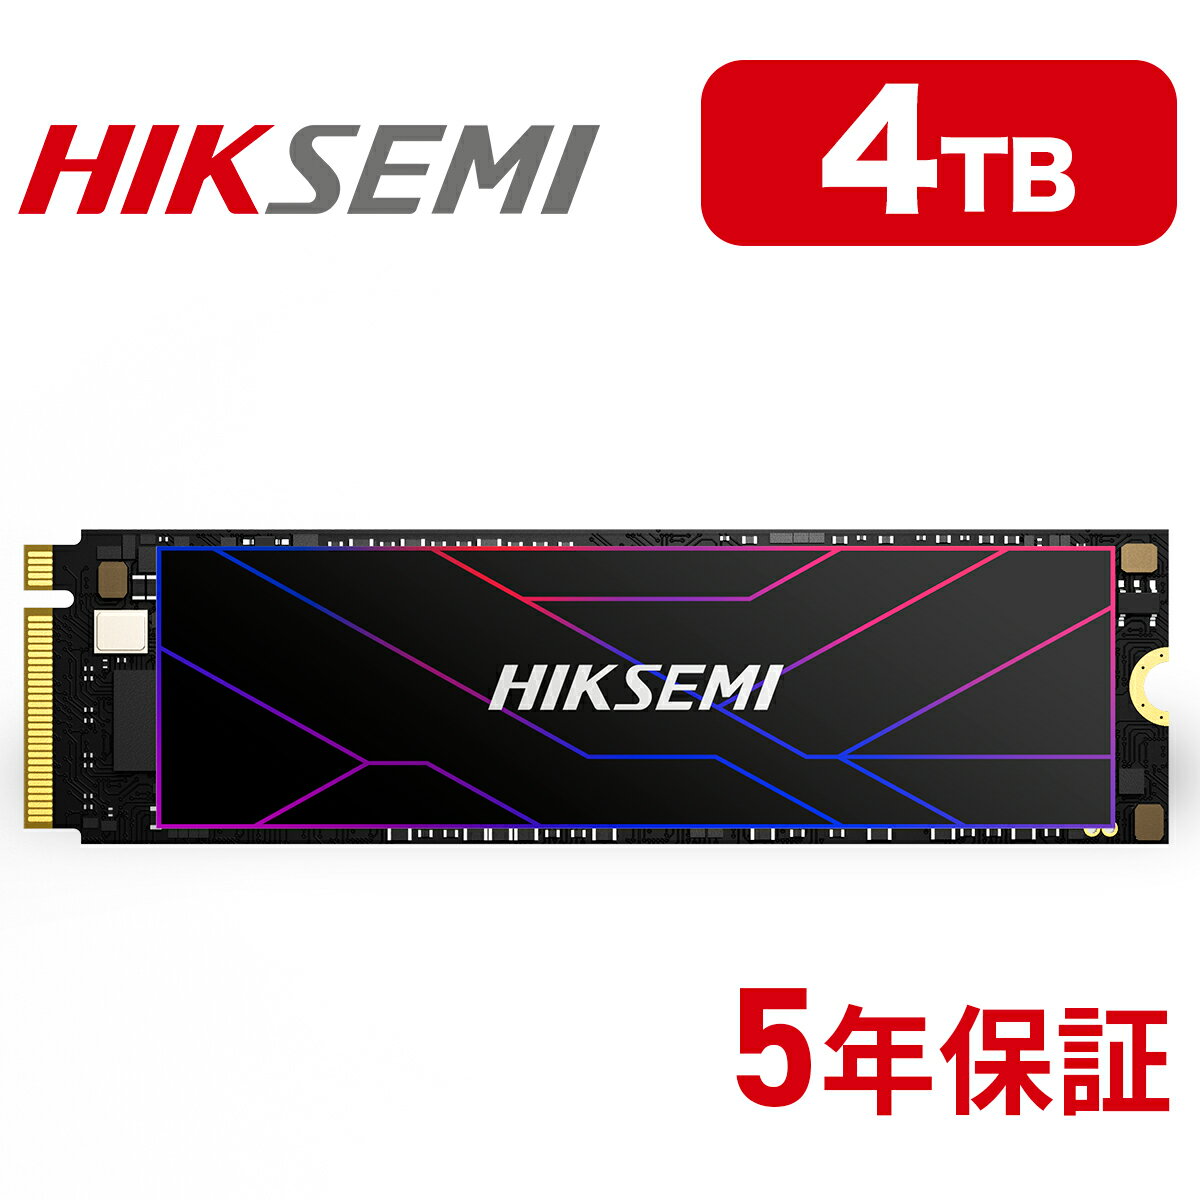 HIKSEMI SSD 4TB 放熱シート付き 高耐久性(TBW:7200TB) NVMe SSD PCIe Gen4.0×4 読み取り:7,450MB/s 書き込み:6,500MB/s PS5増設 内蔵 M.2 Type 2280 3D TLC NAND デスクトップPC ノートPC かんたん取付け 国内5年保証